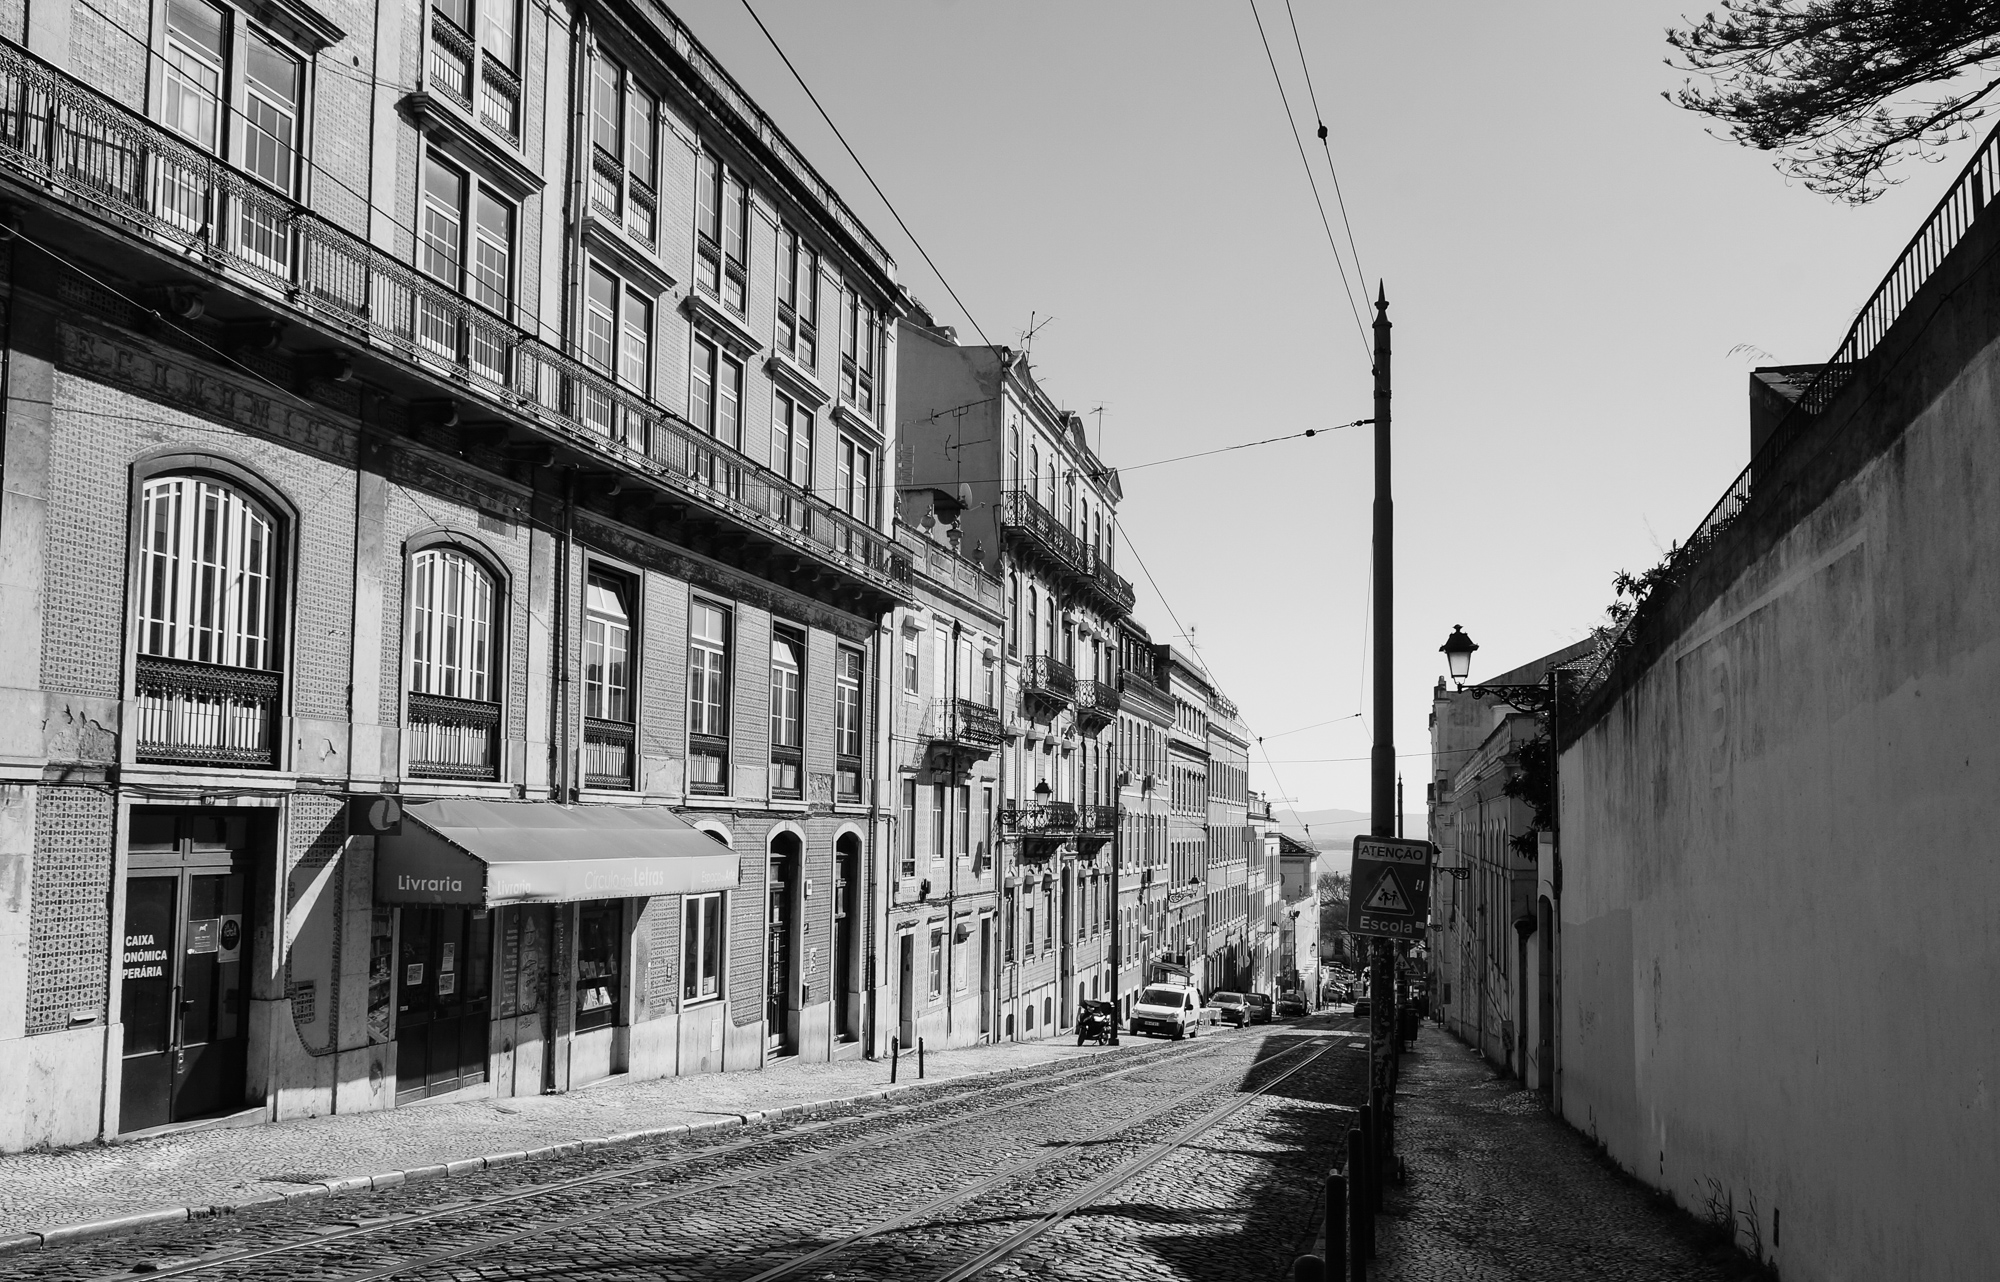 Lisbon street view, February 2019